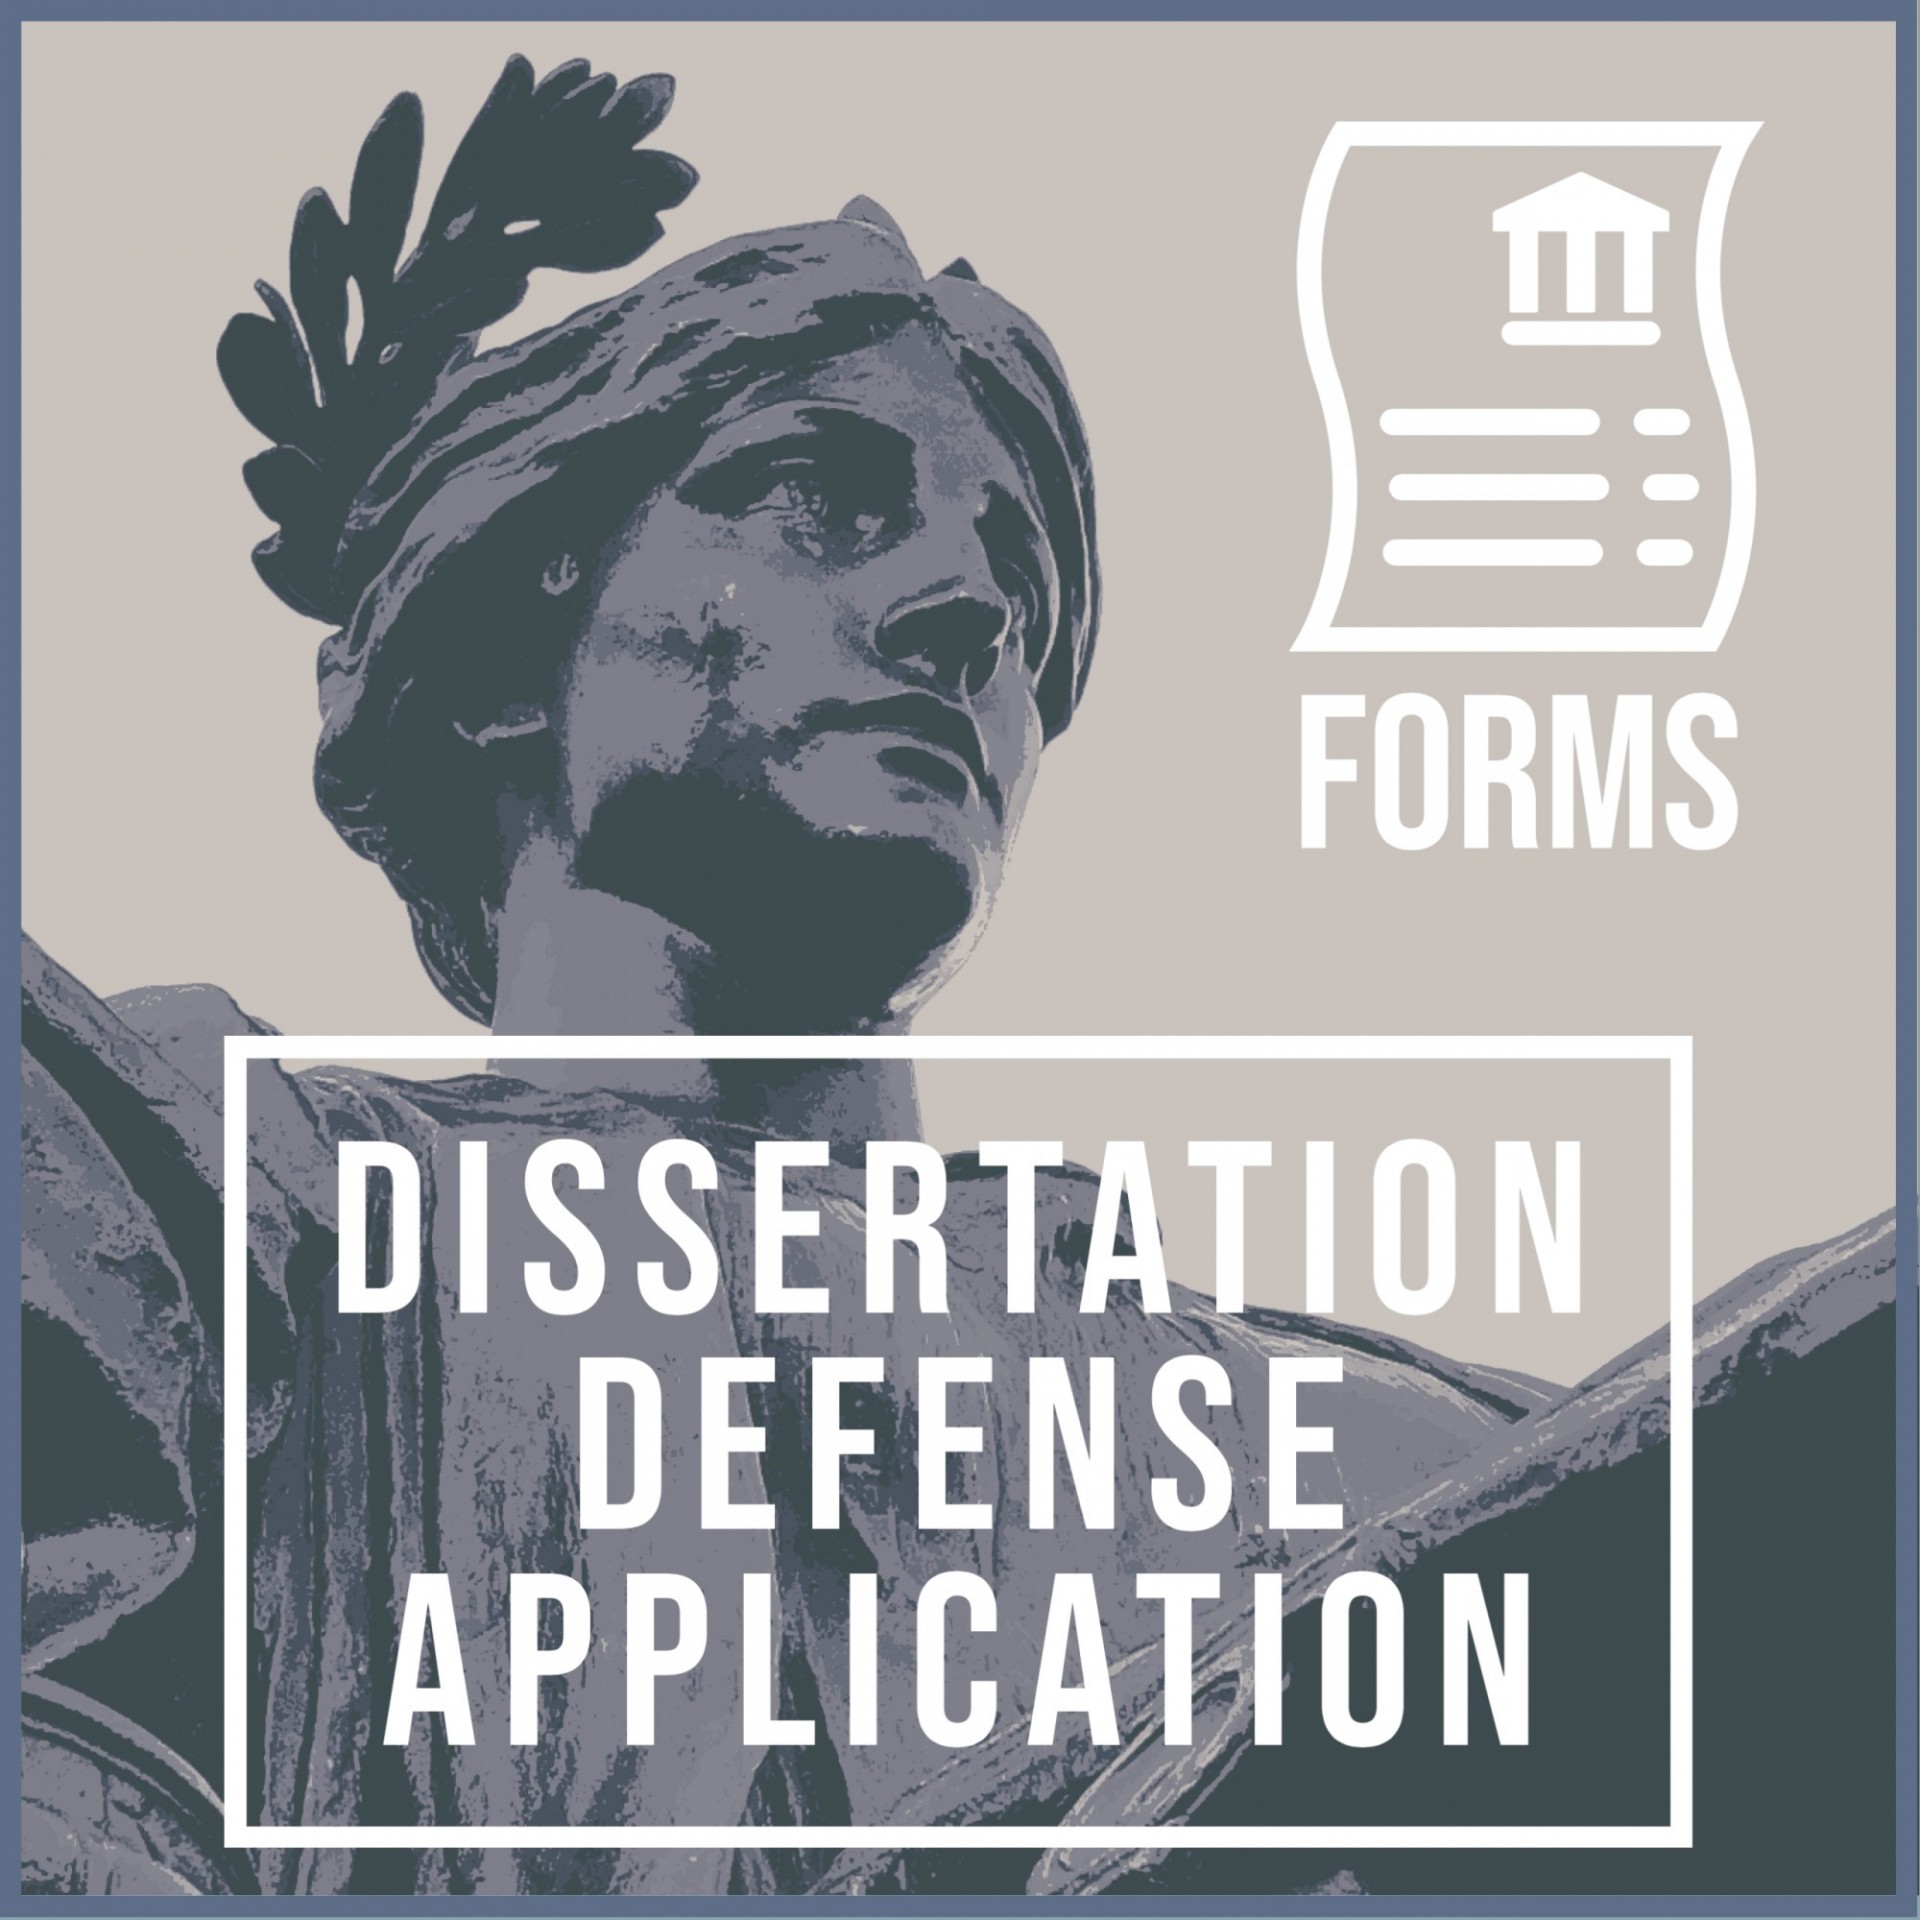 Forms Icon: Dissertation Defense Application